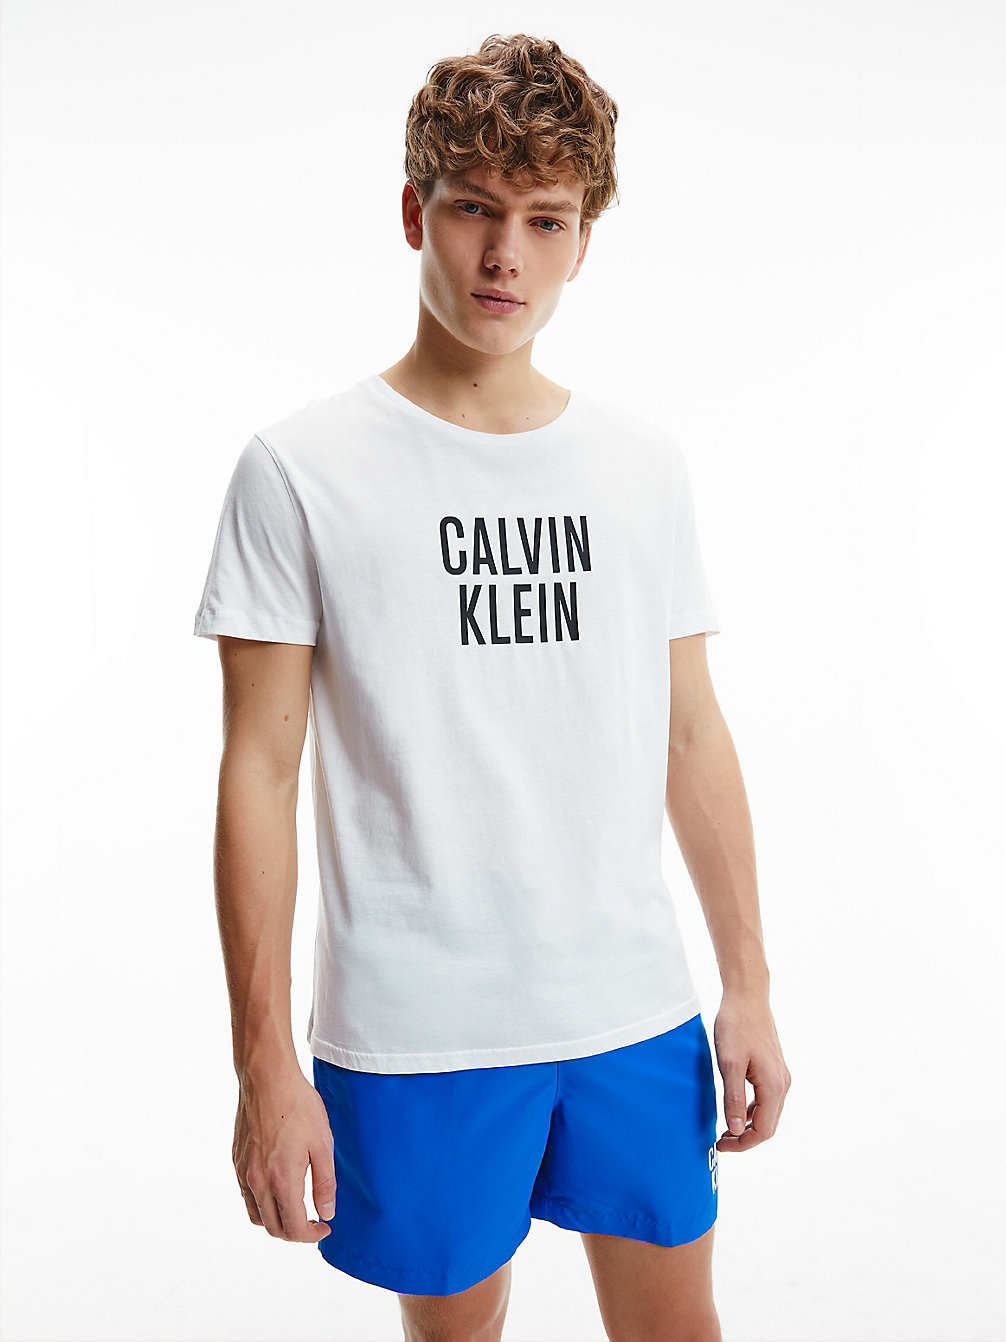 PVH CLASSIC WHITE > Пляжная футболка из органического хлопка - Intense Power > undefined женщины - Calvin Klein